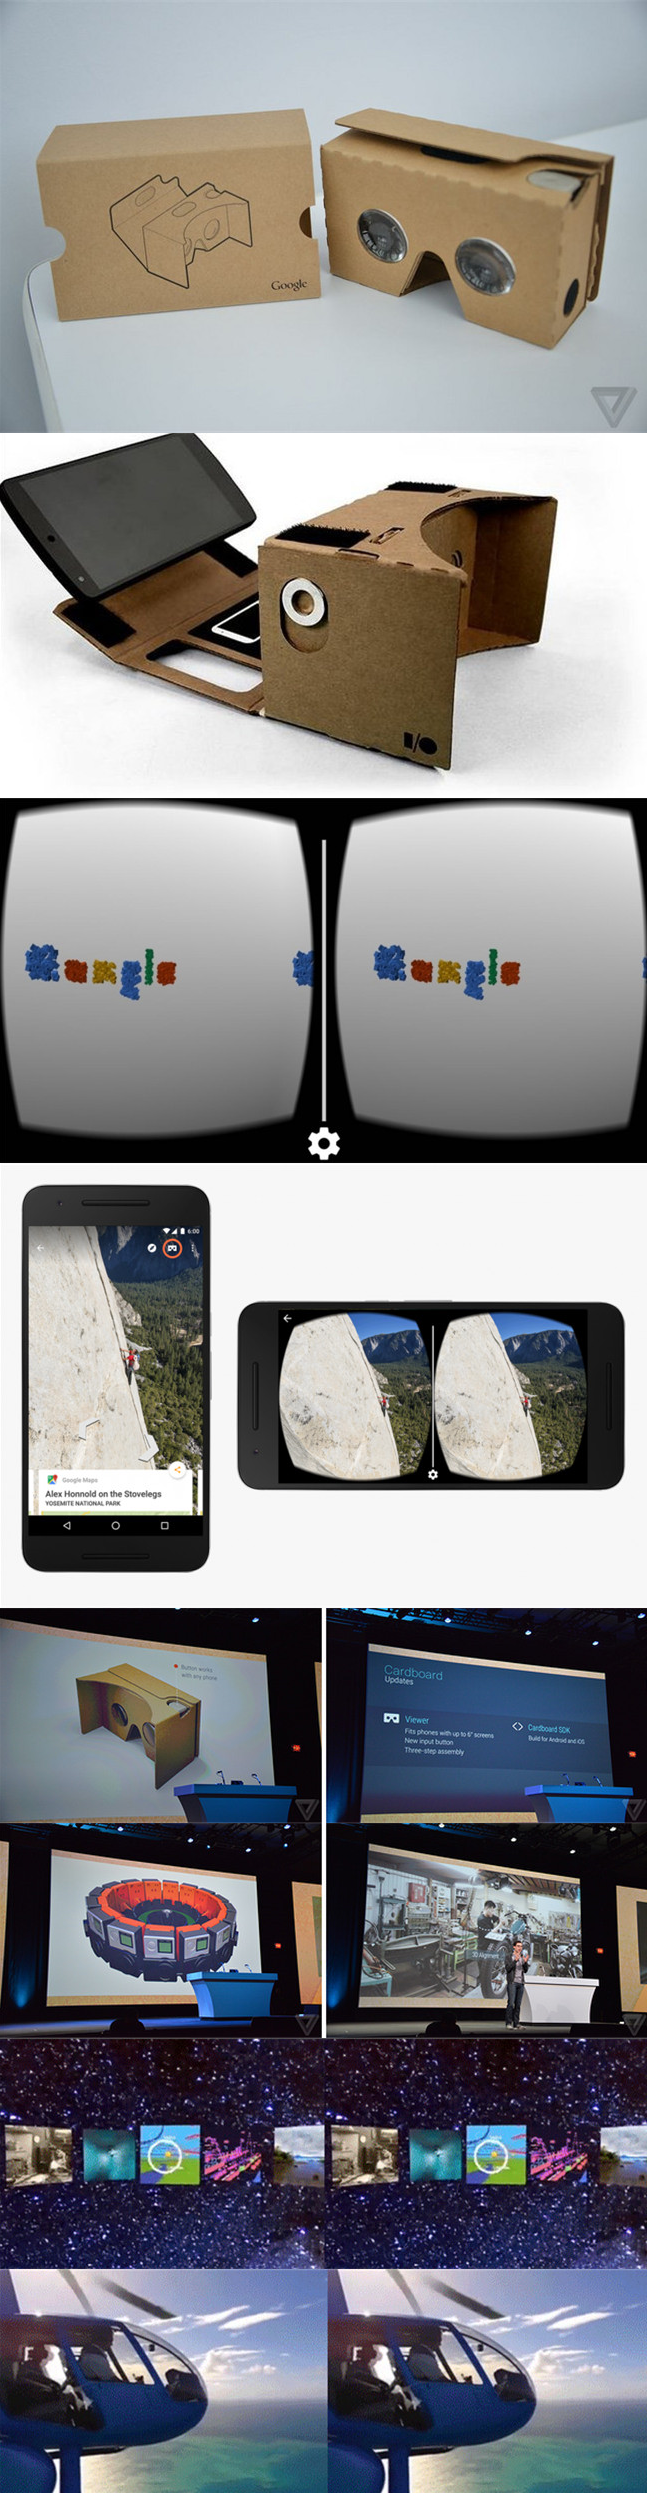 Google Cardboard VR眼镜 二代_72变智能硬件.png